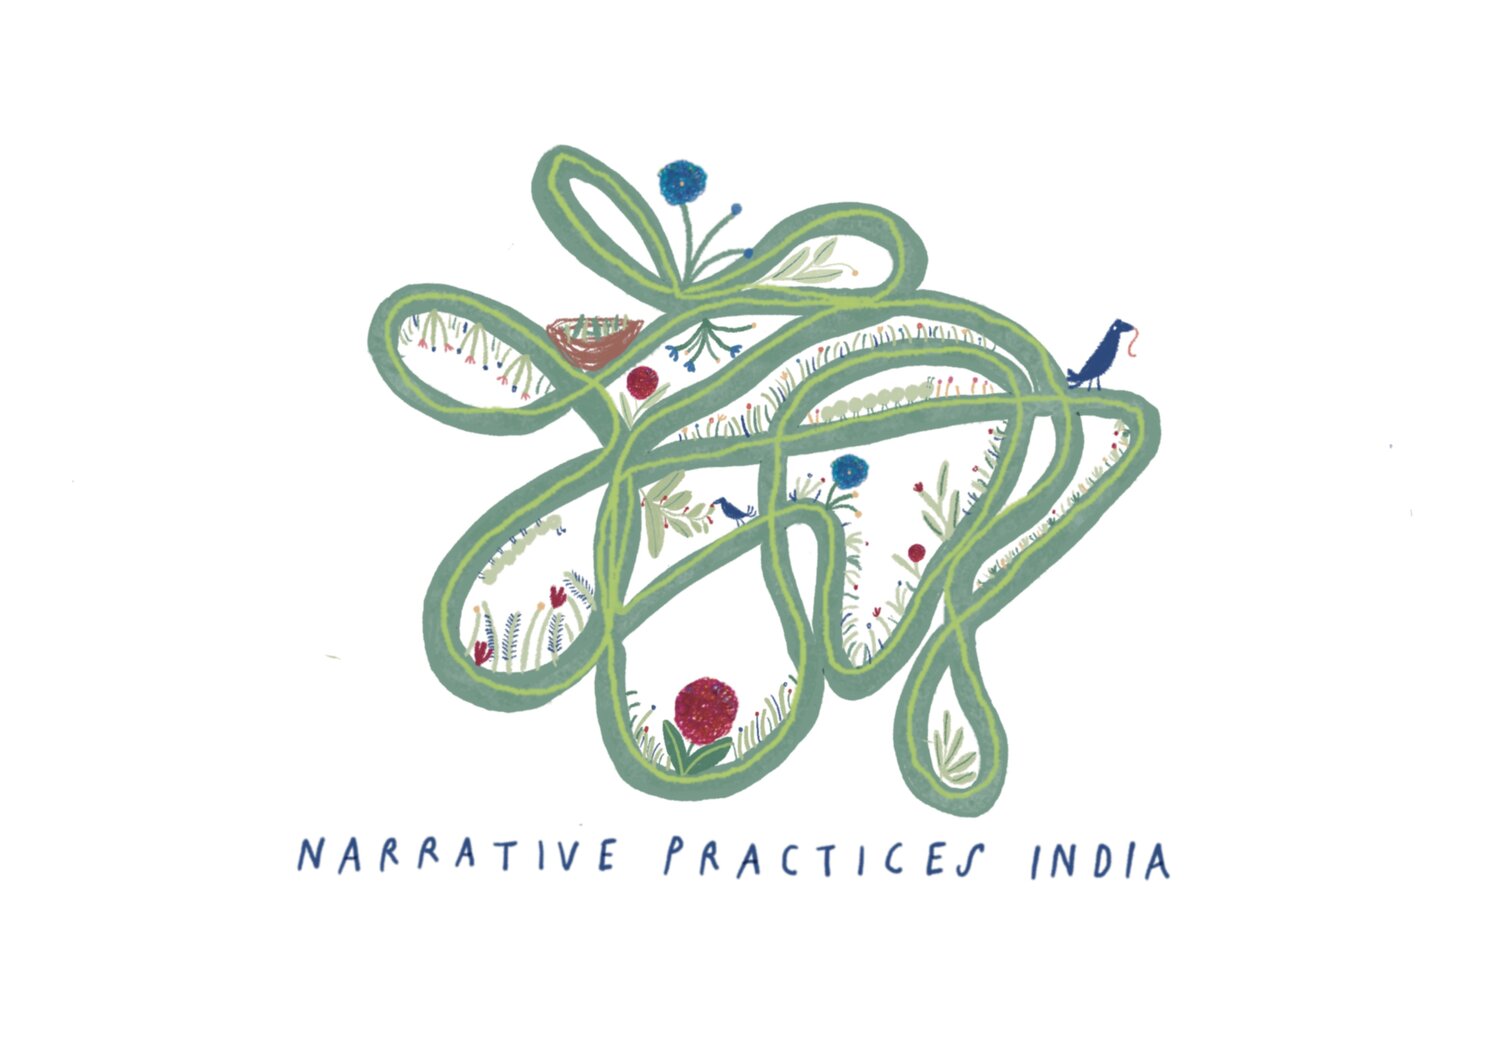 Narrative Practices India